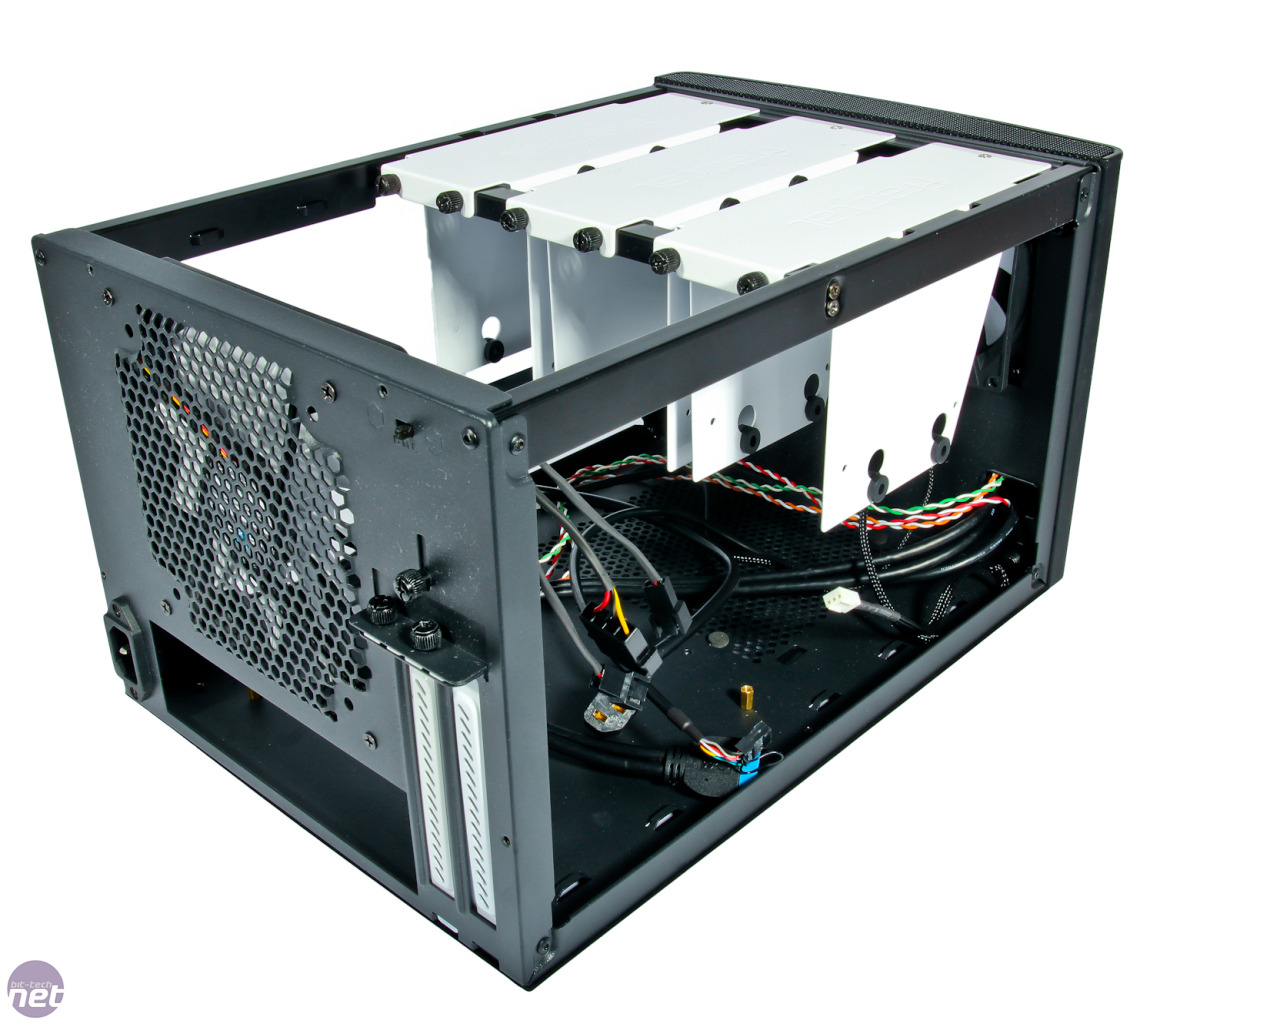 Fractal Design Node 304 Mini-ITX Case